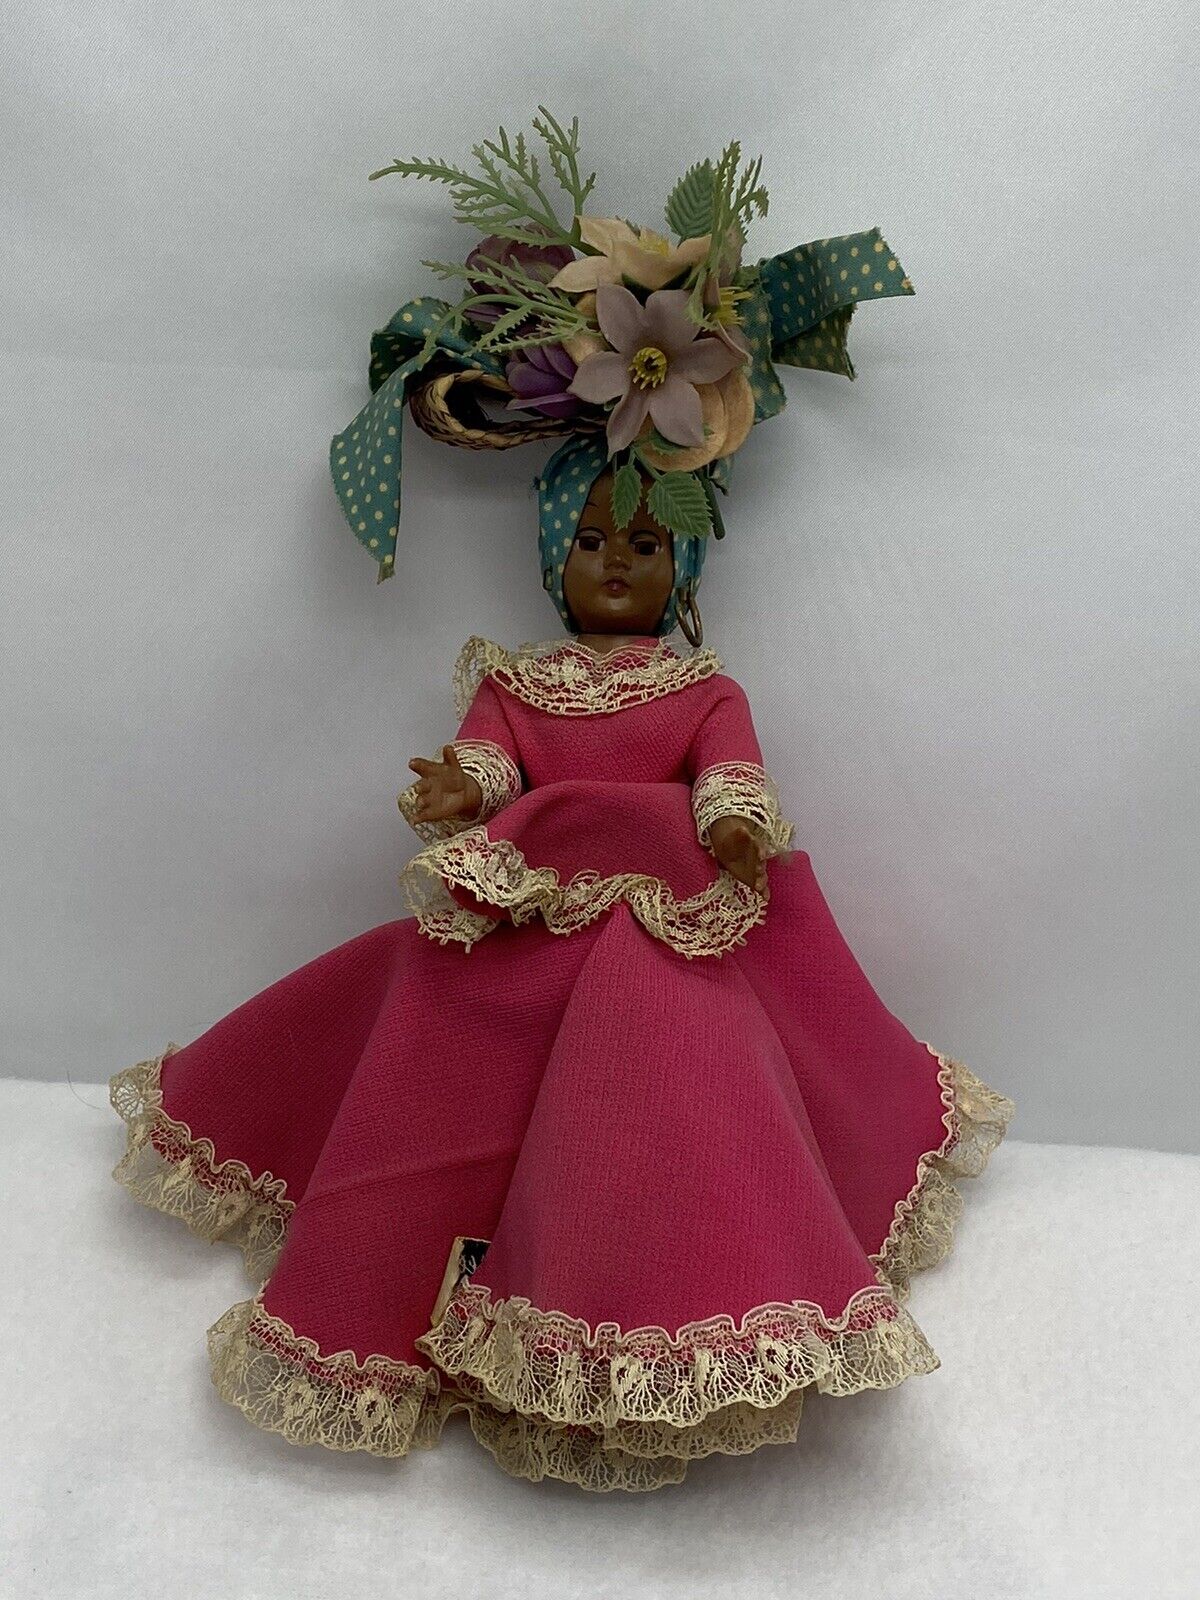 Vintage Chiquita Doll 9” Virgin Islands ￼ eyes close floral headdress